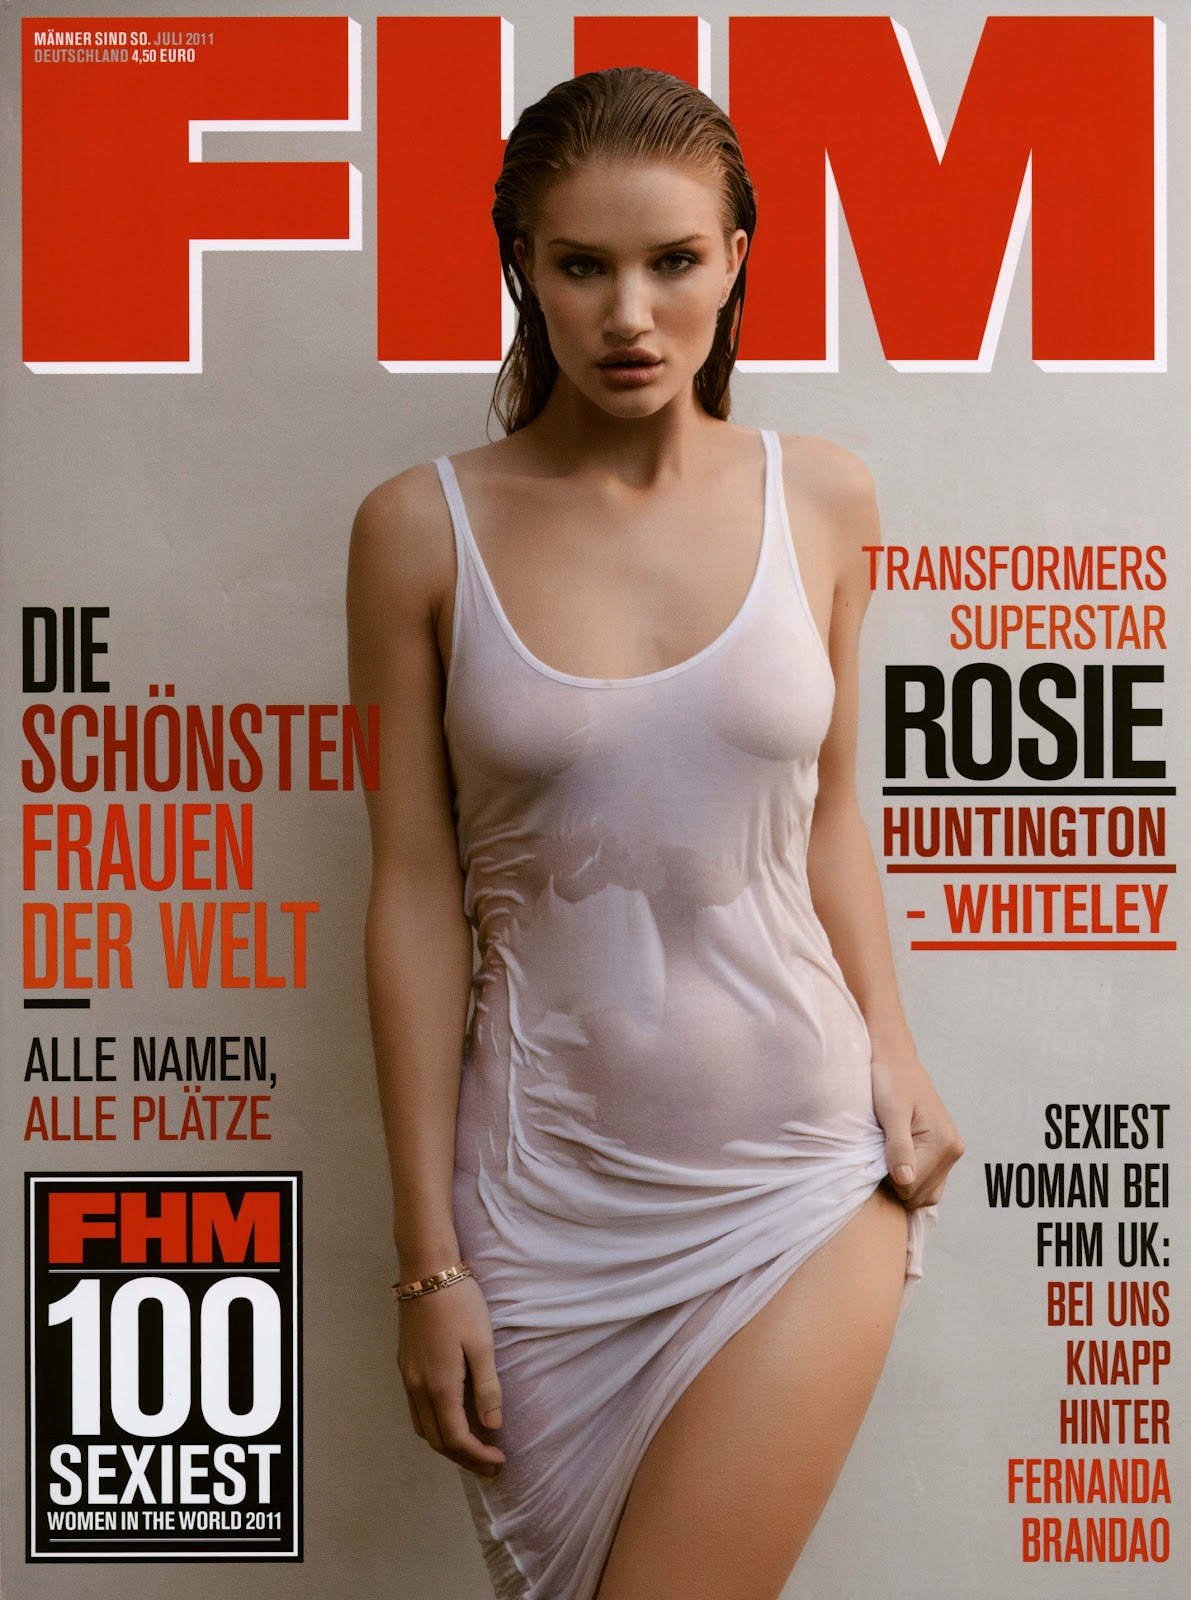 http://4.bp.blogspot.com/-5wMrIEuSFqE/Tzq9oW8jmfI/AAAAAAAAW5k/X1zHxfc1E9Y/s1600/FHM_Top_100_Sexiest_Women_2011_Germany_Scanof.net_01.jpg